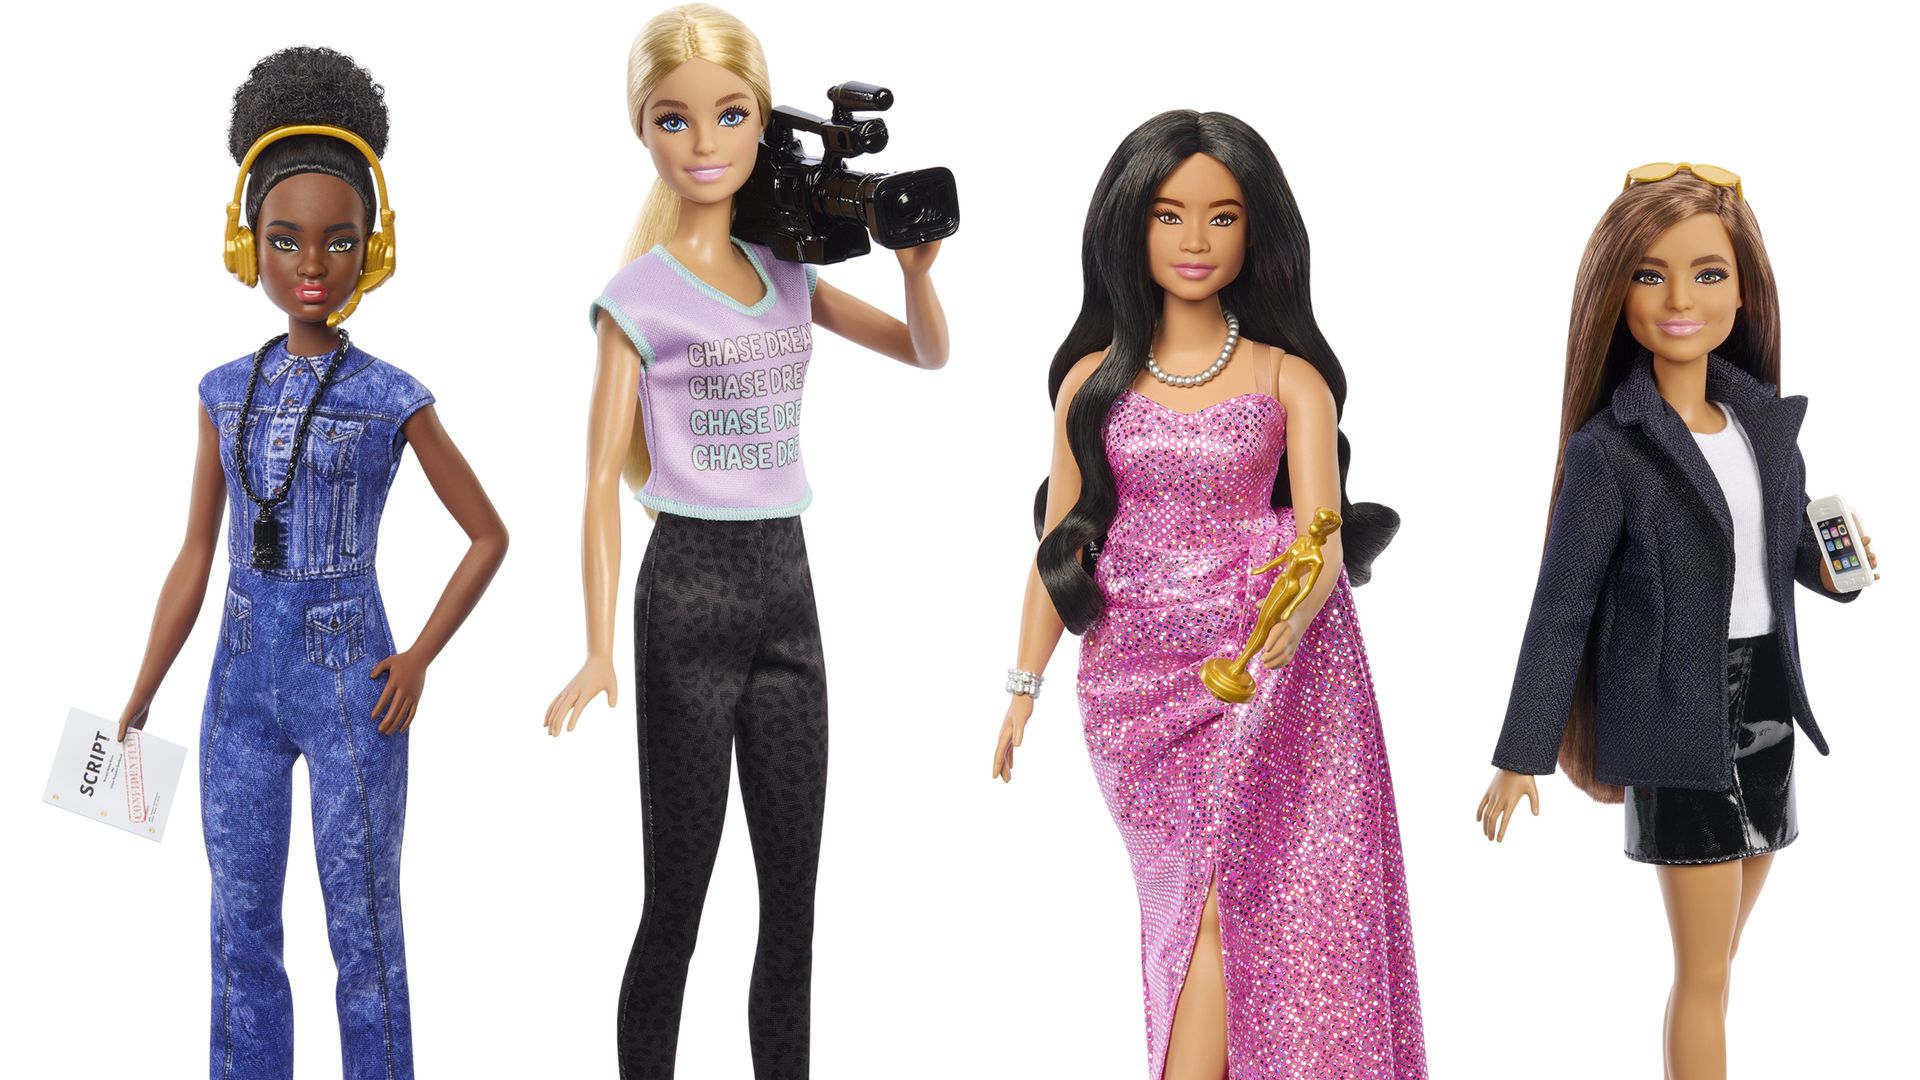 Four Barbie career in film dolls